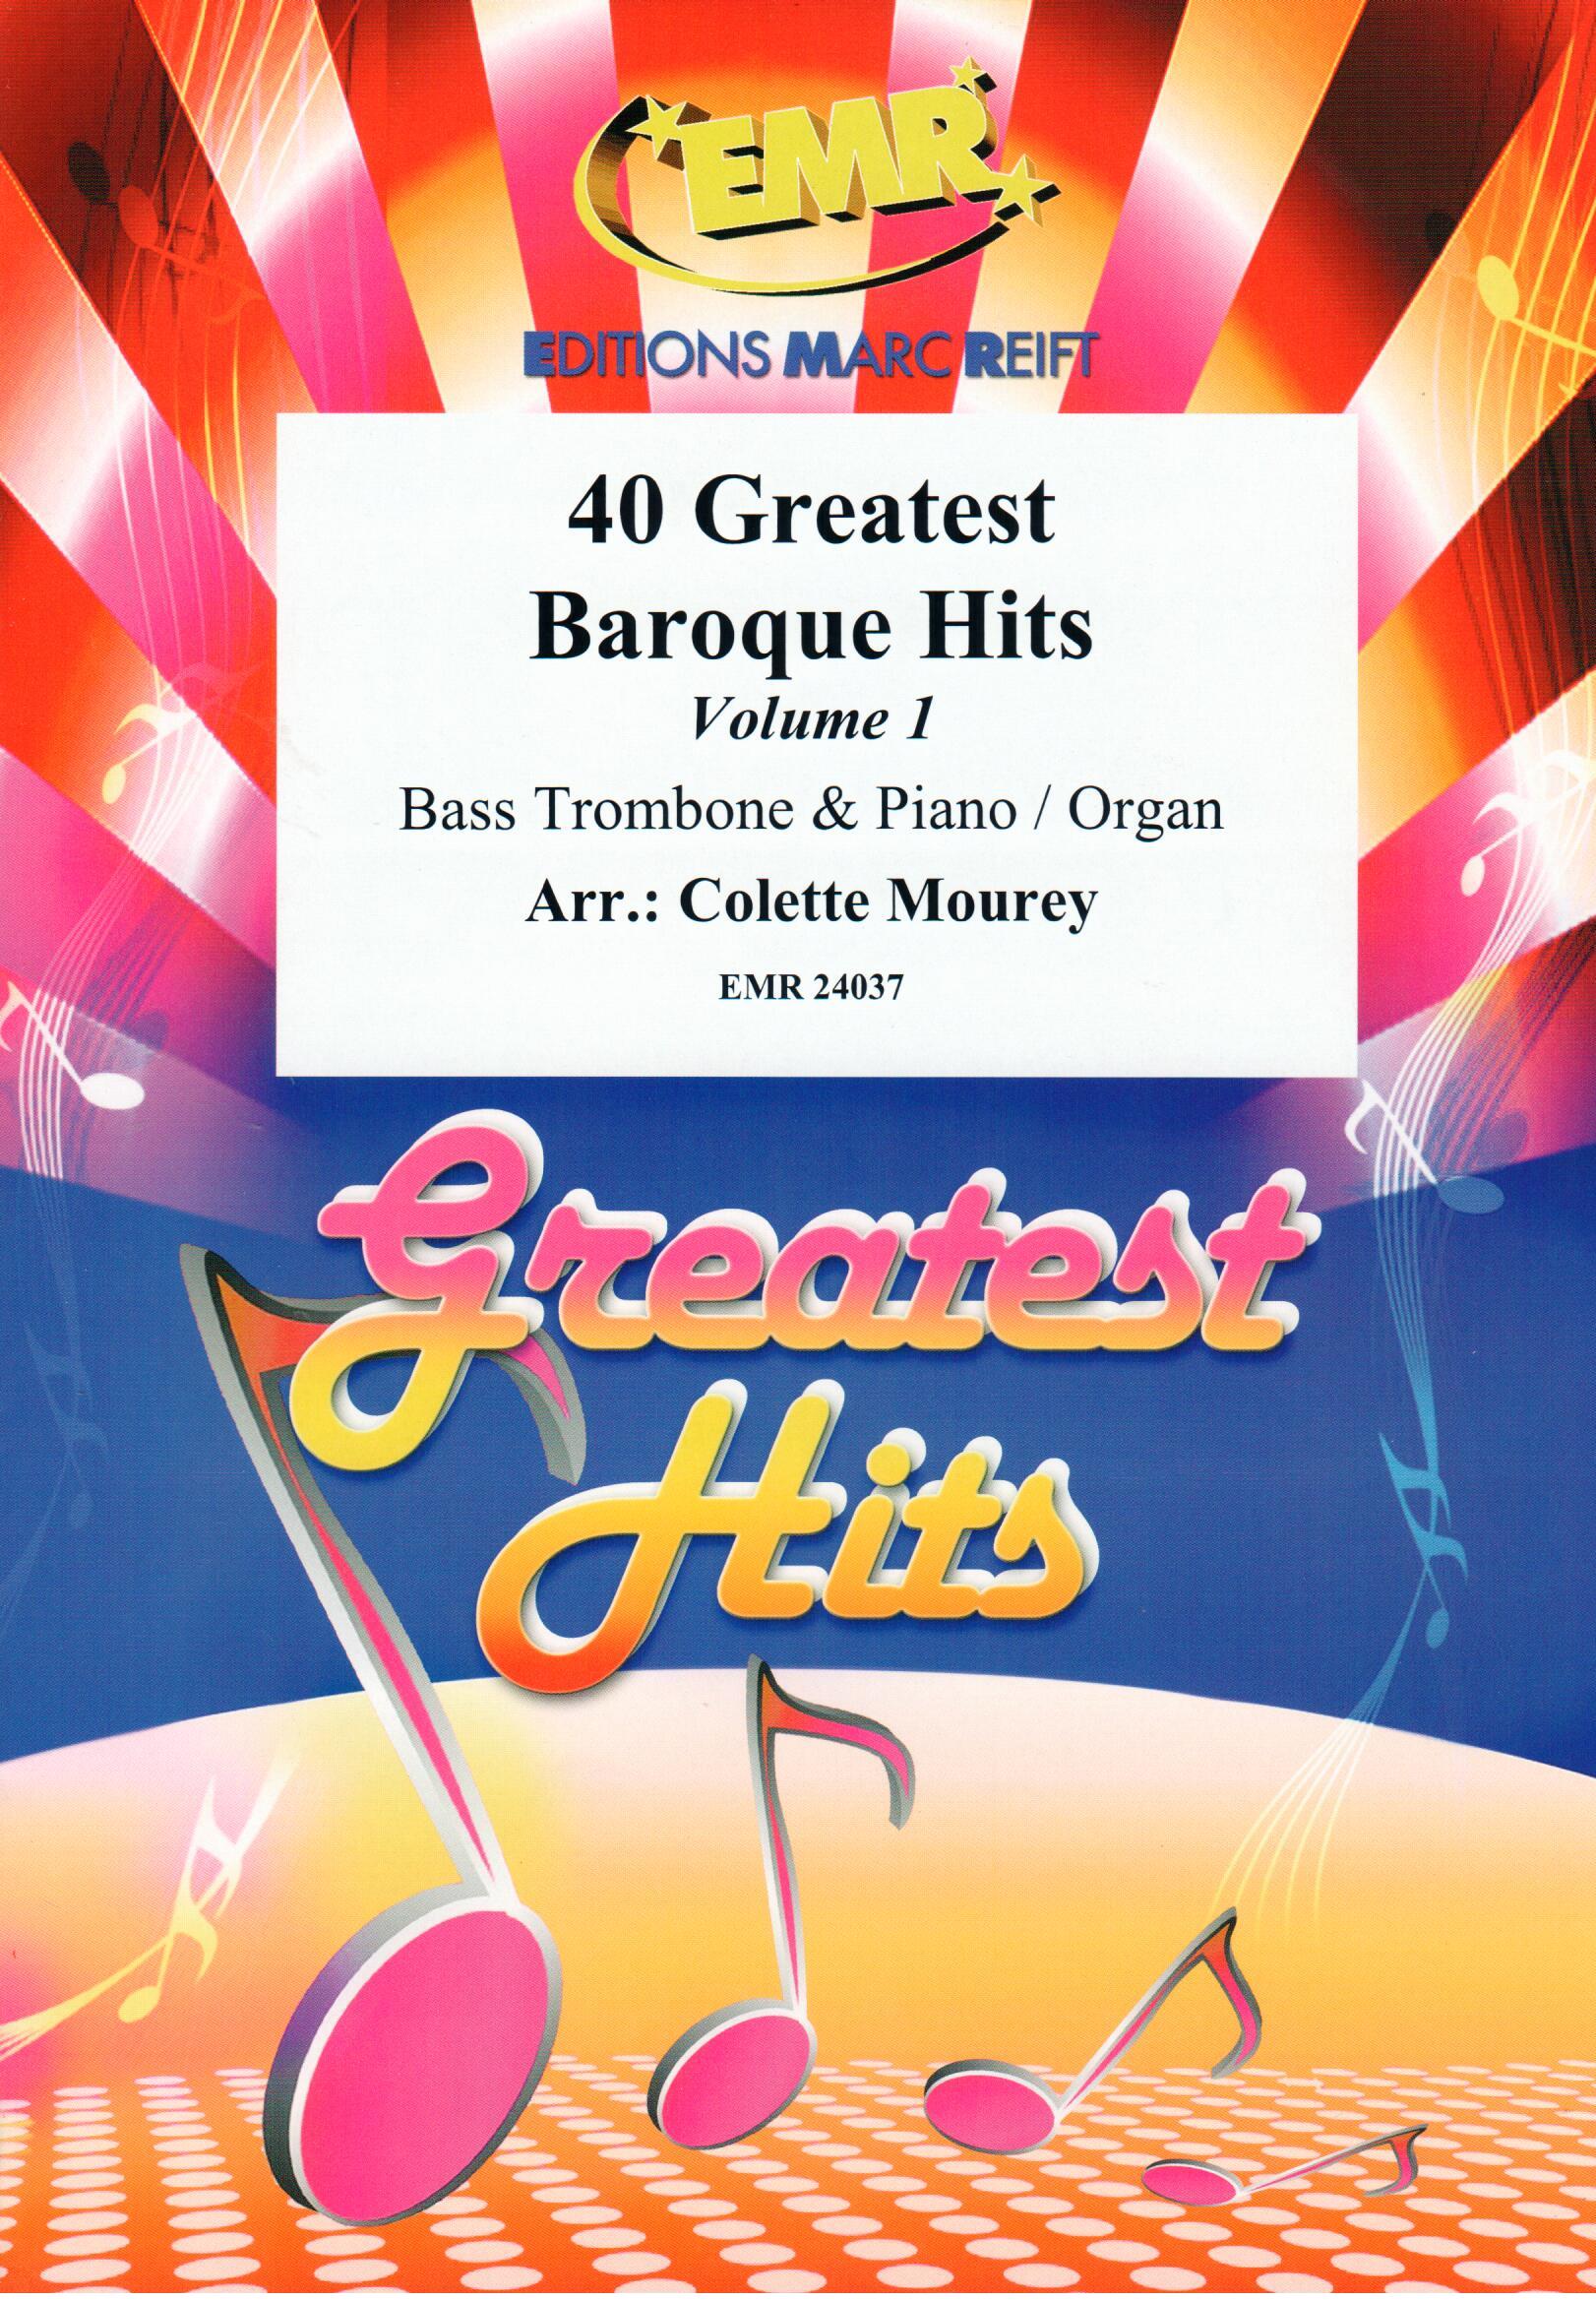 40 GREATEST BAROQUE HITS VOLUME 1, EMR Bass Trombone